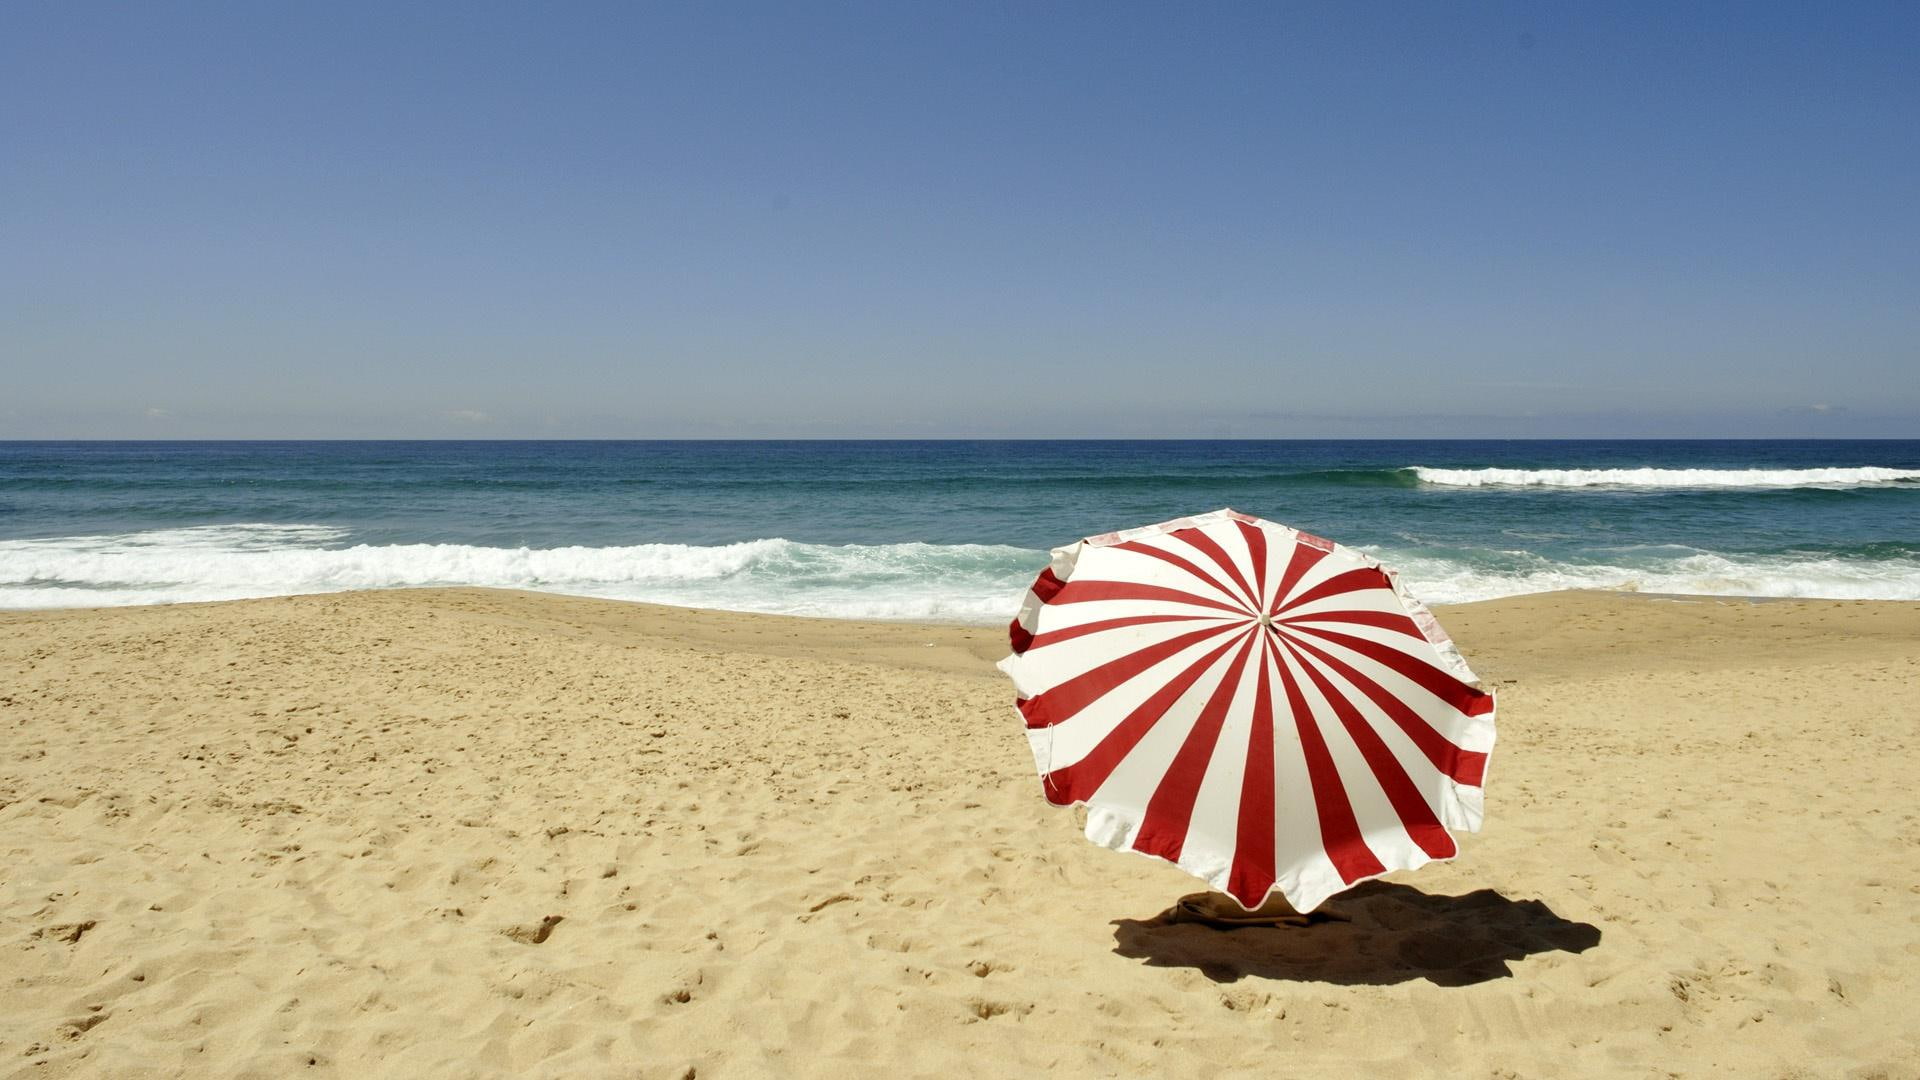 Red and white umbrella on the beach, red and white umbrella, beaches